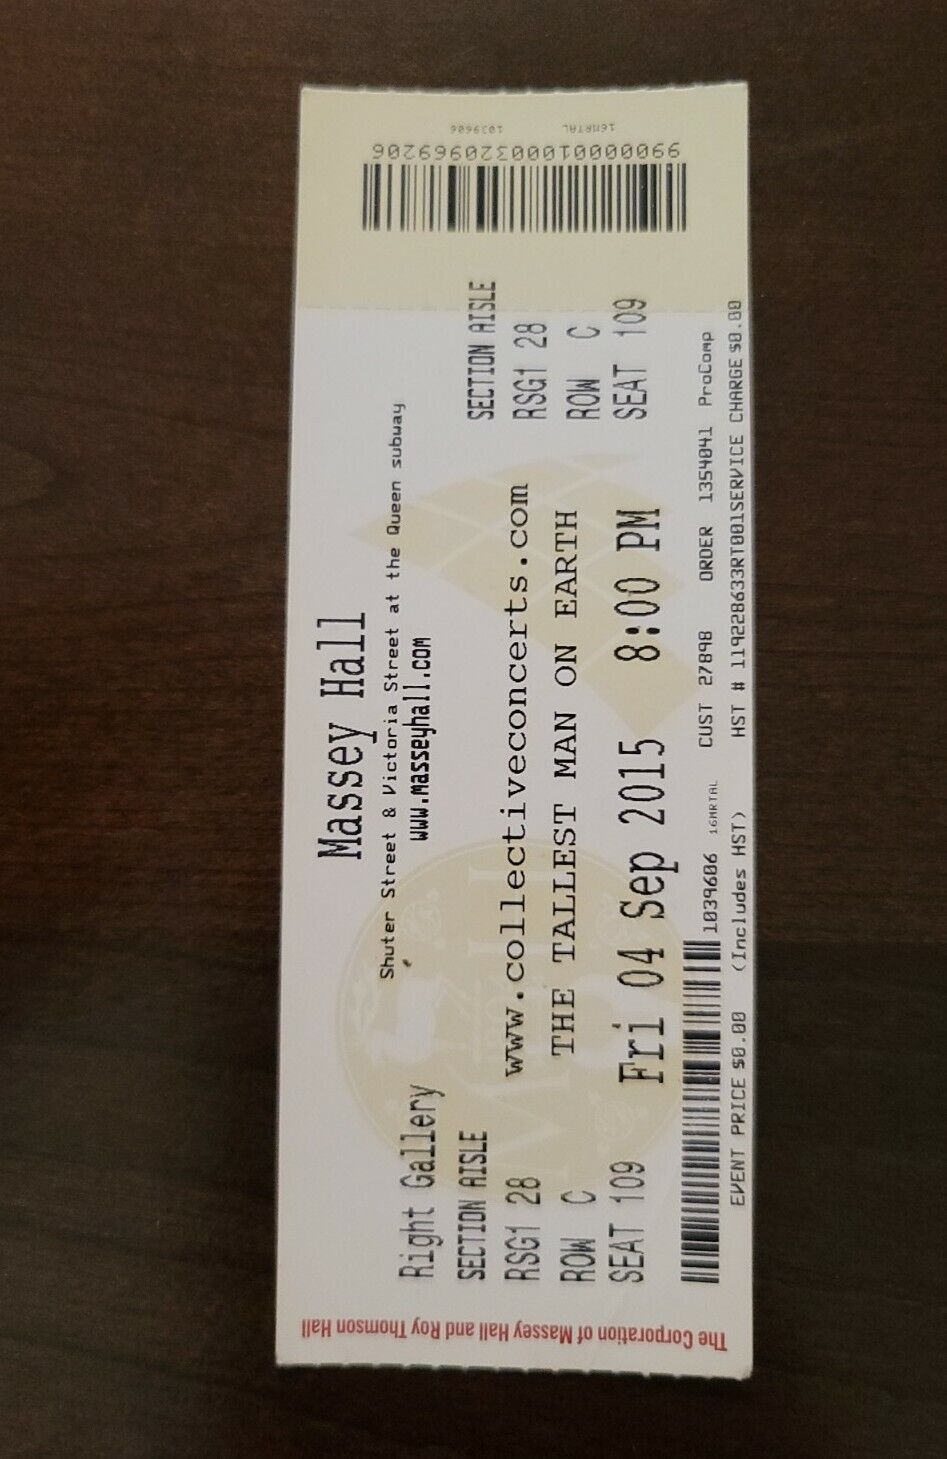 The Tallest Man On Earth 2015 Toronto Massey Hall Original Concert Ticket Stub